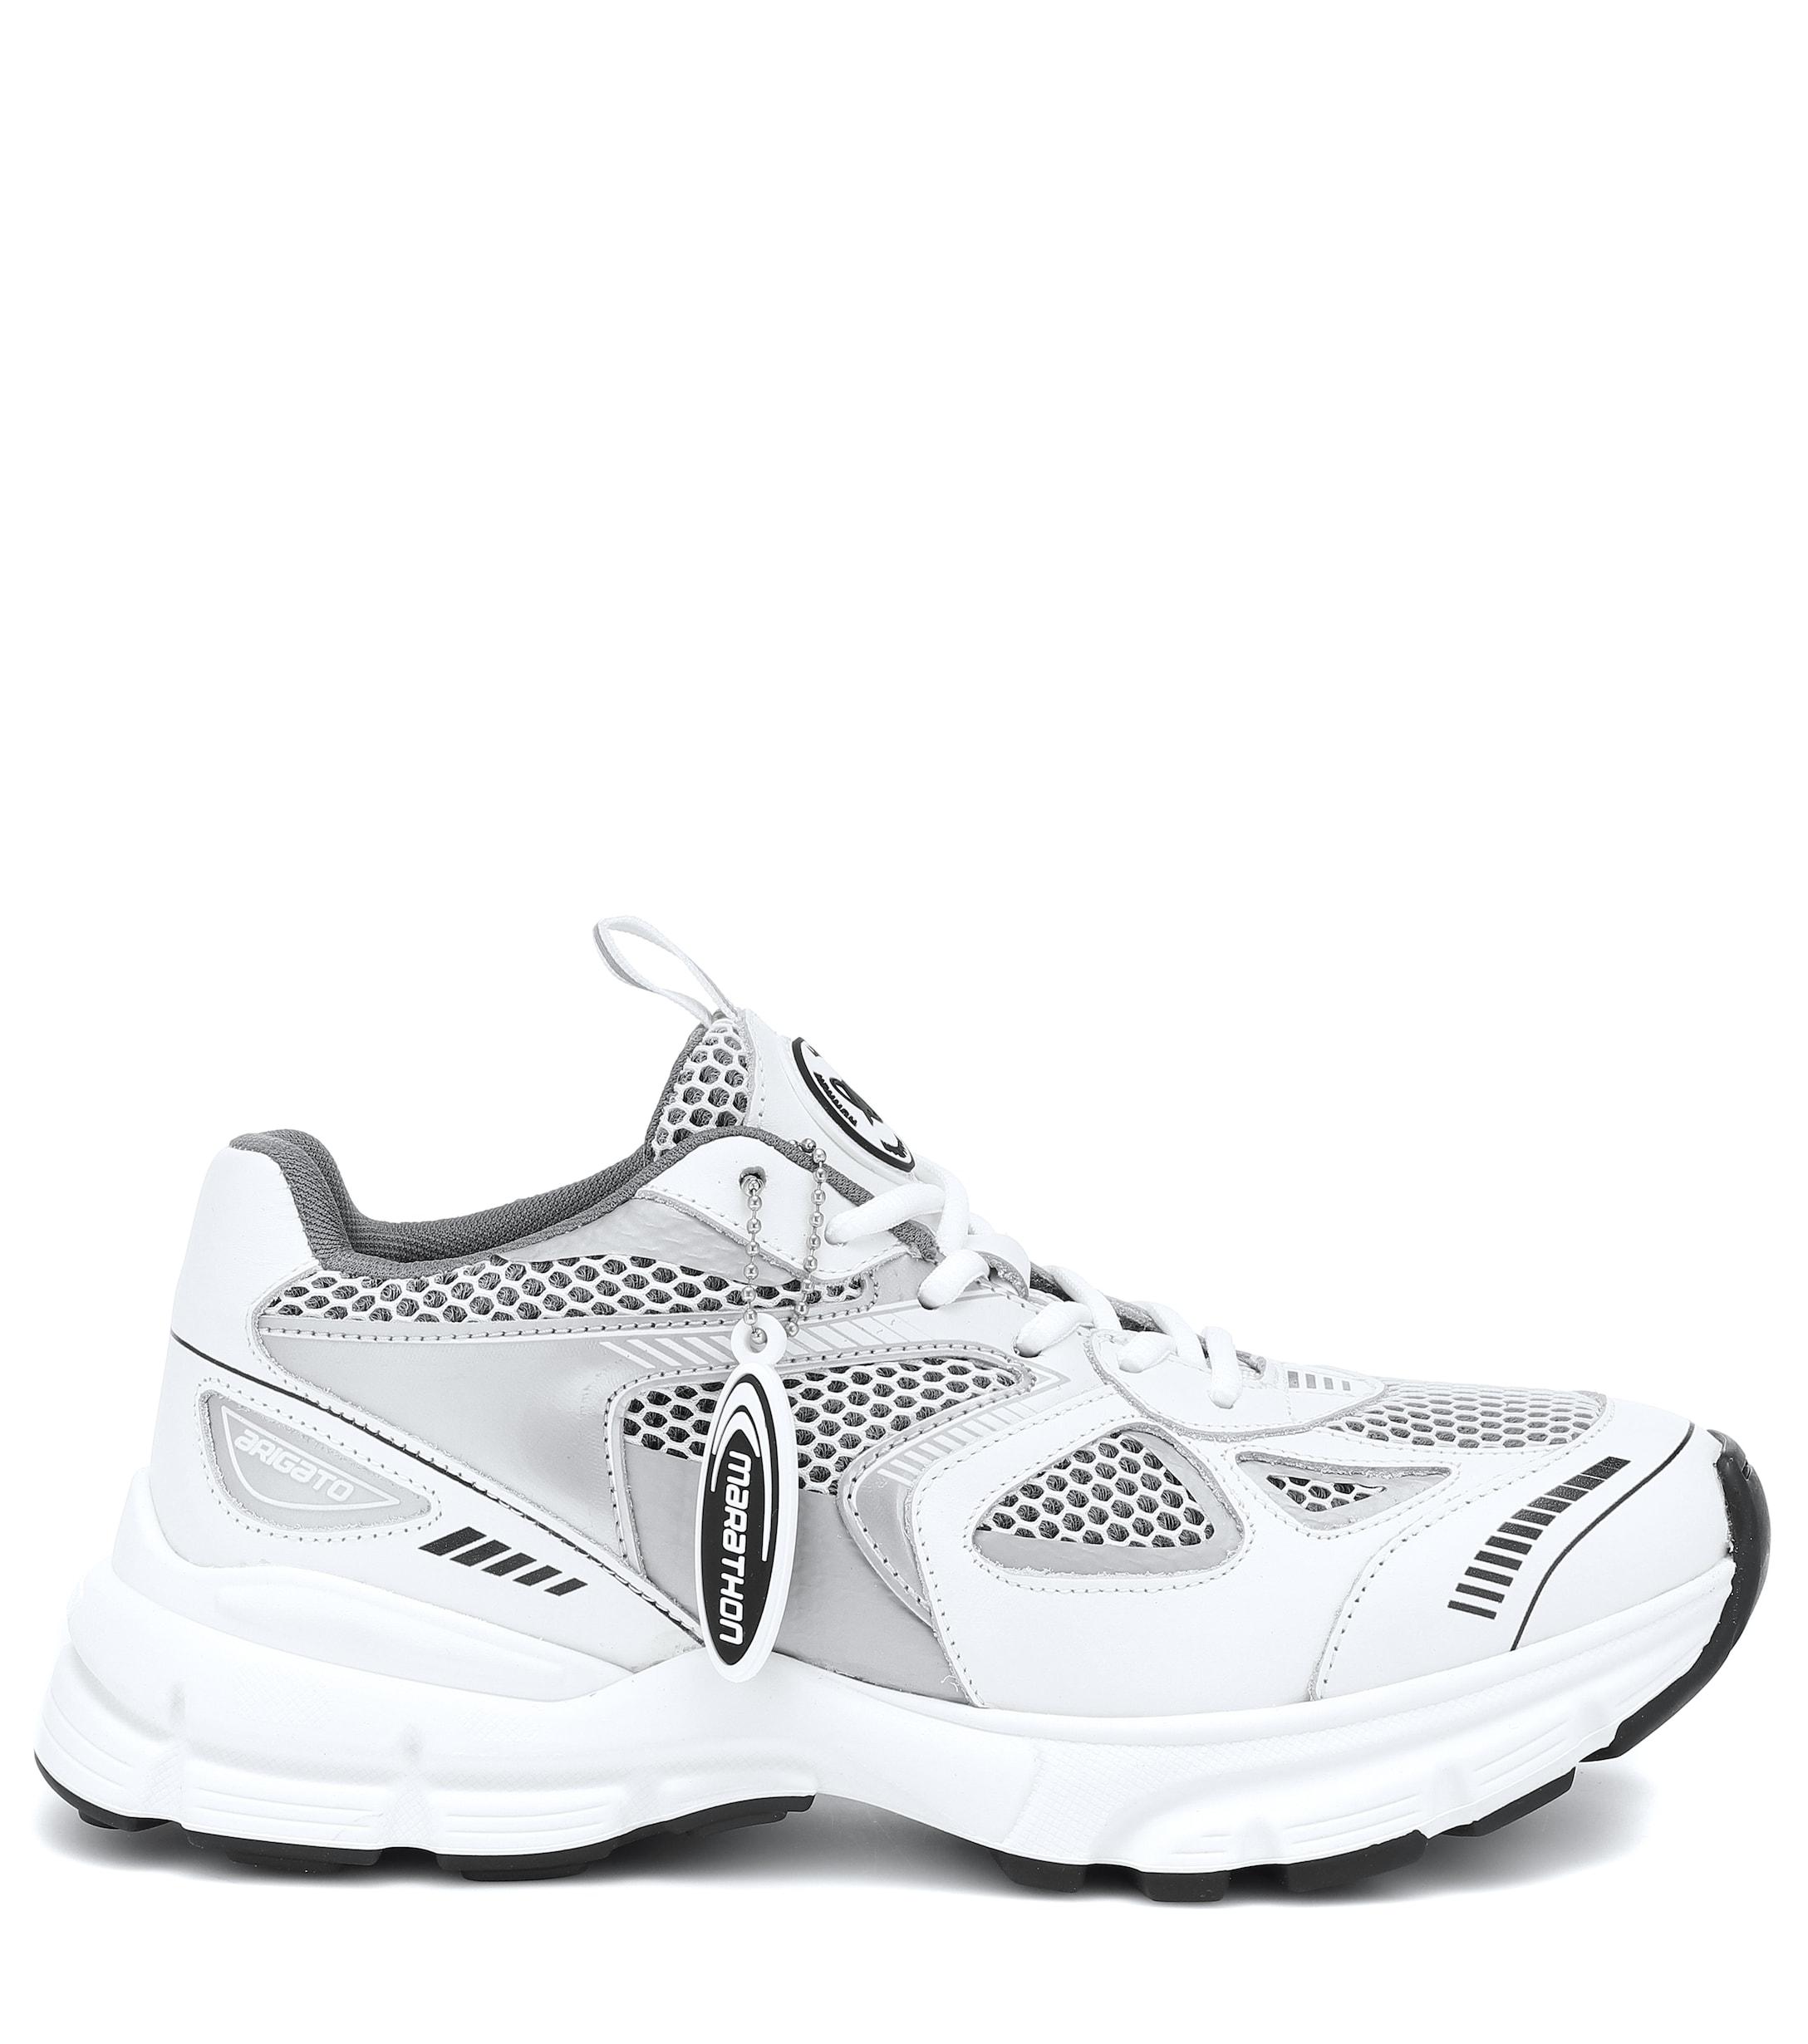 Axel Arigato Marathon Runner Leather Sneakers in White - Lyst